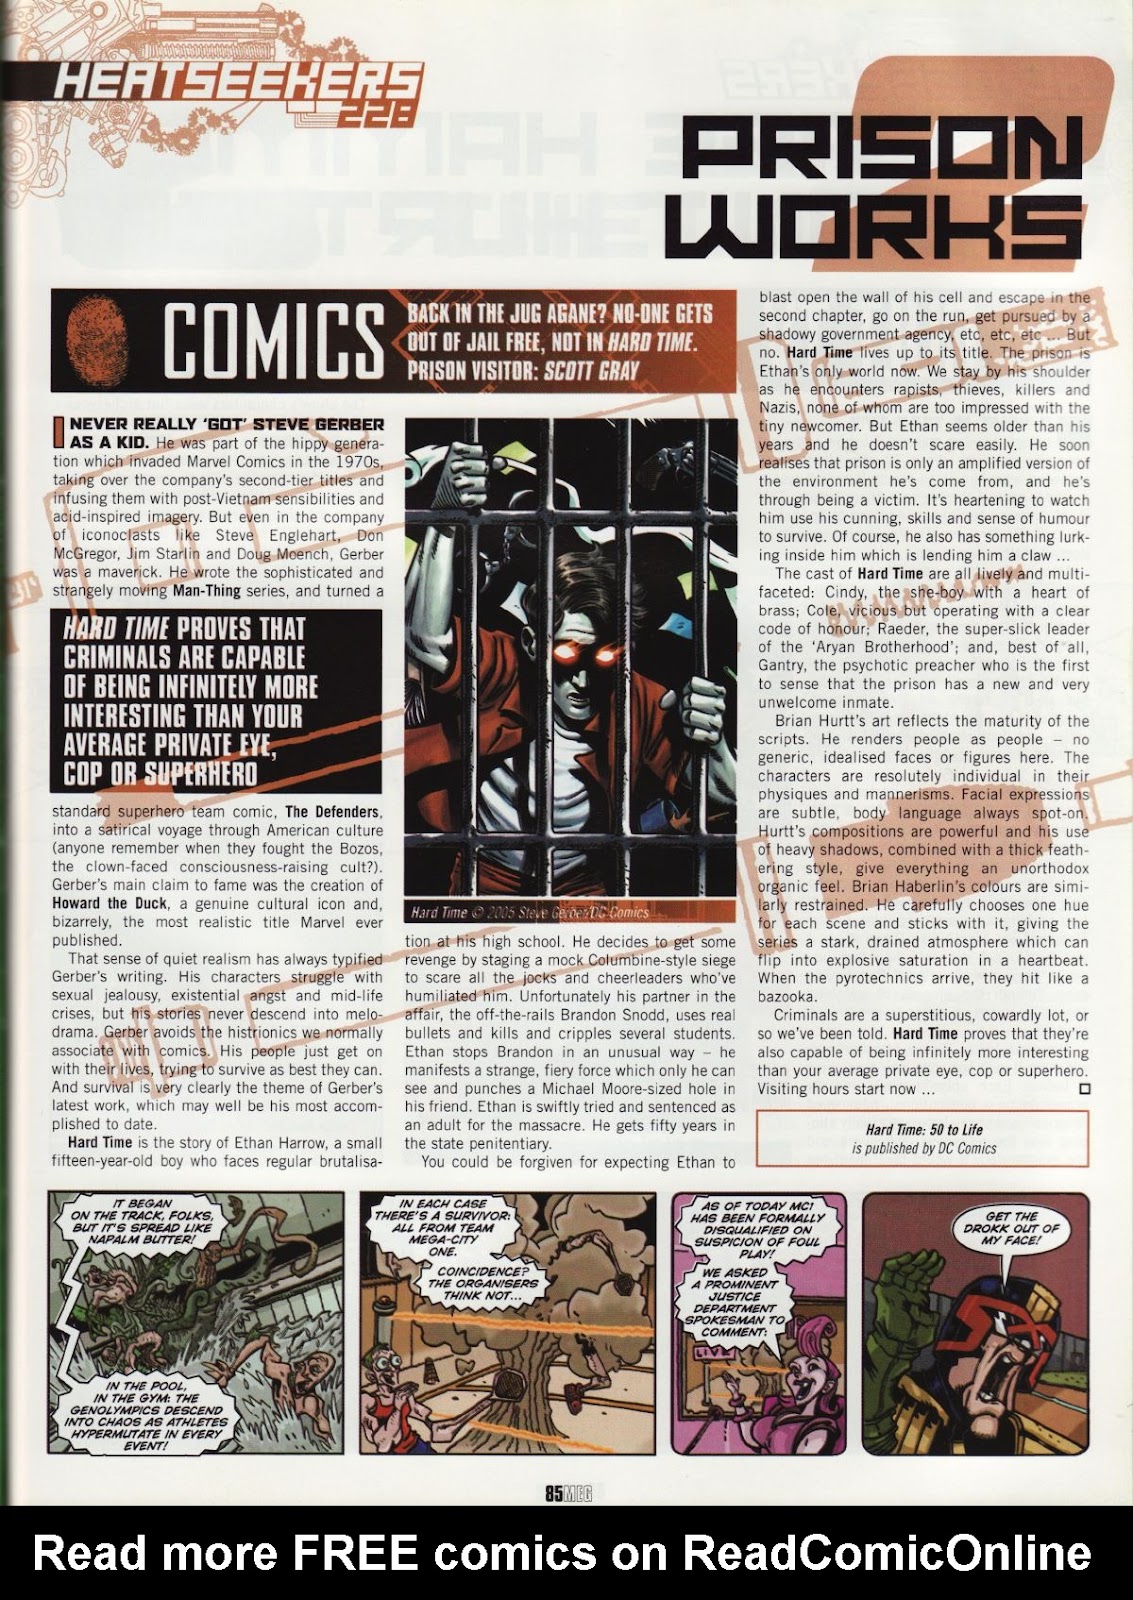 Judge Dredd Megazine (Vol. 5) issue 228 - Page 85